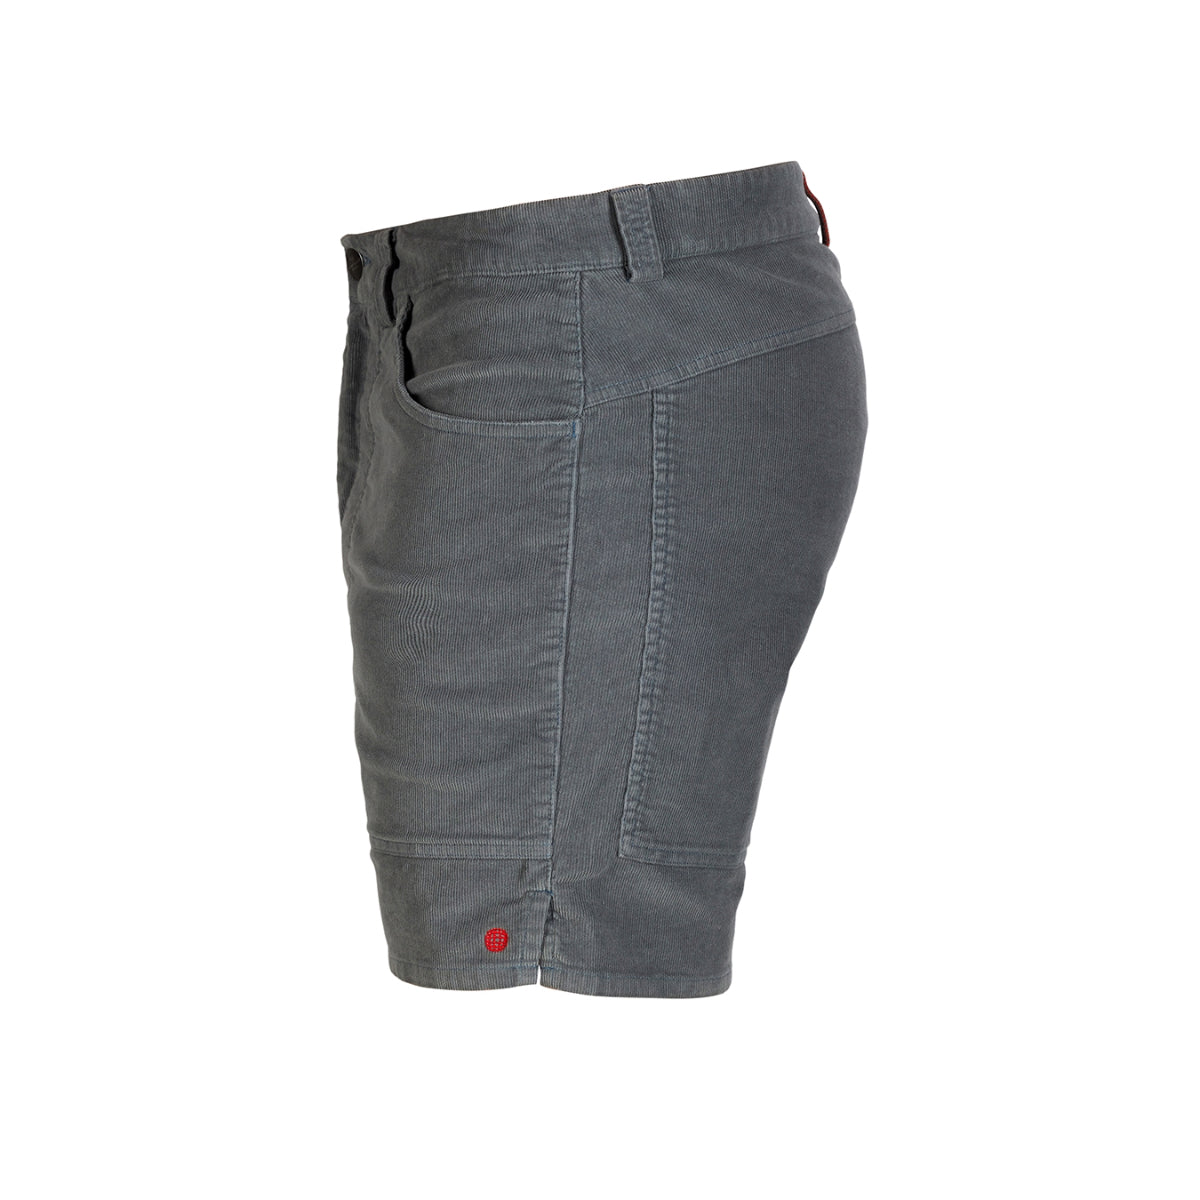 Amundsen Sports - Men's 7 Incher Concord Garment Dyed Shorts - Stormy Blue